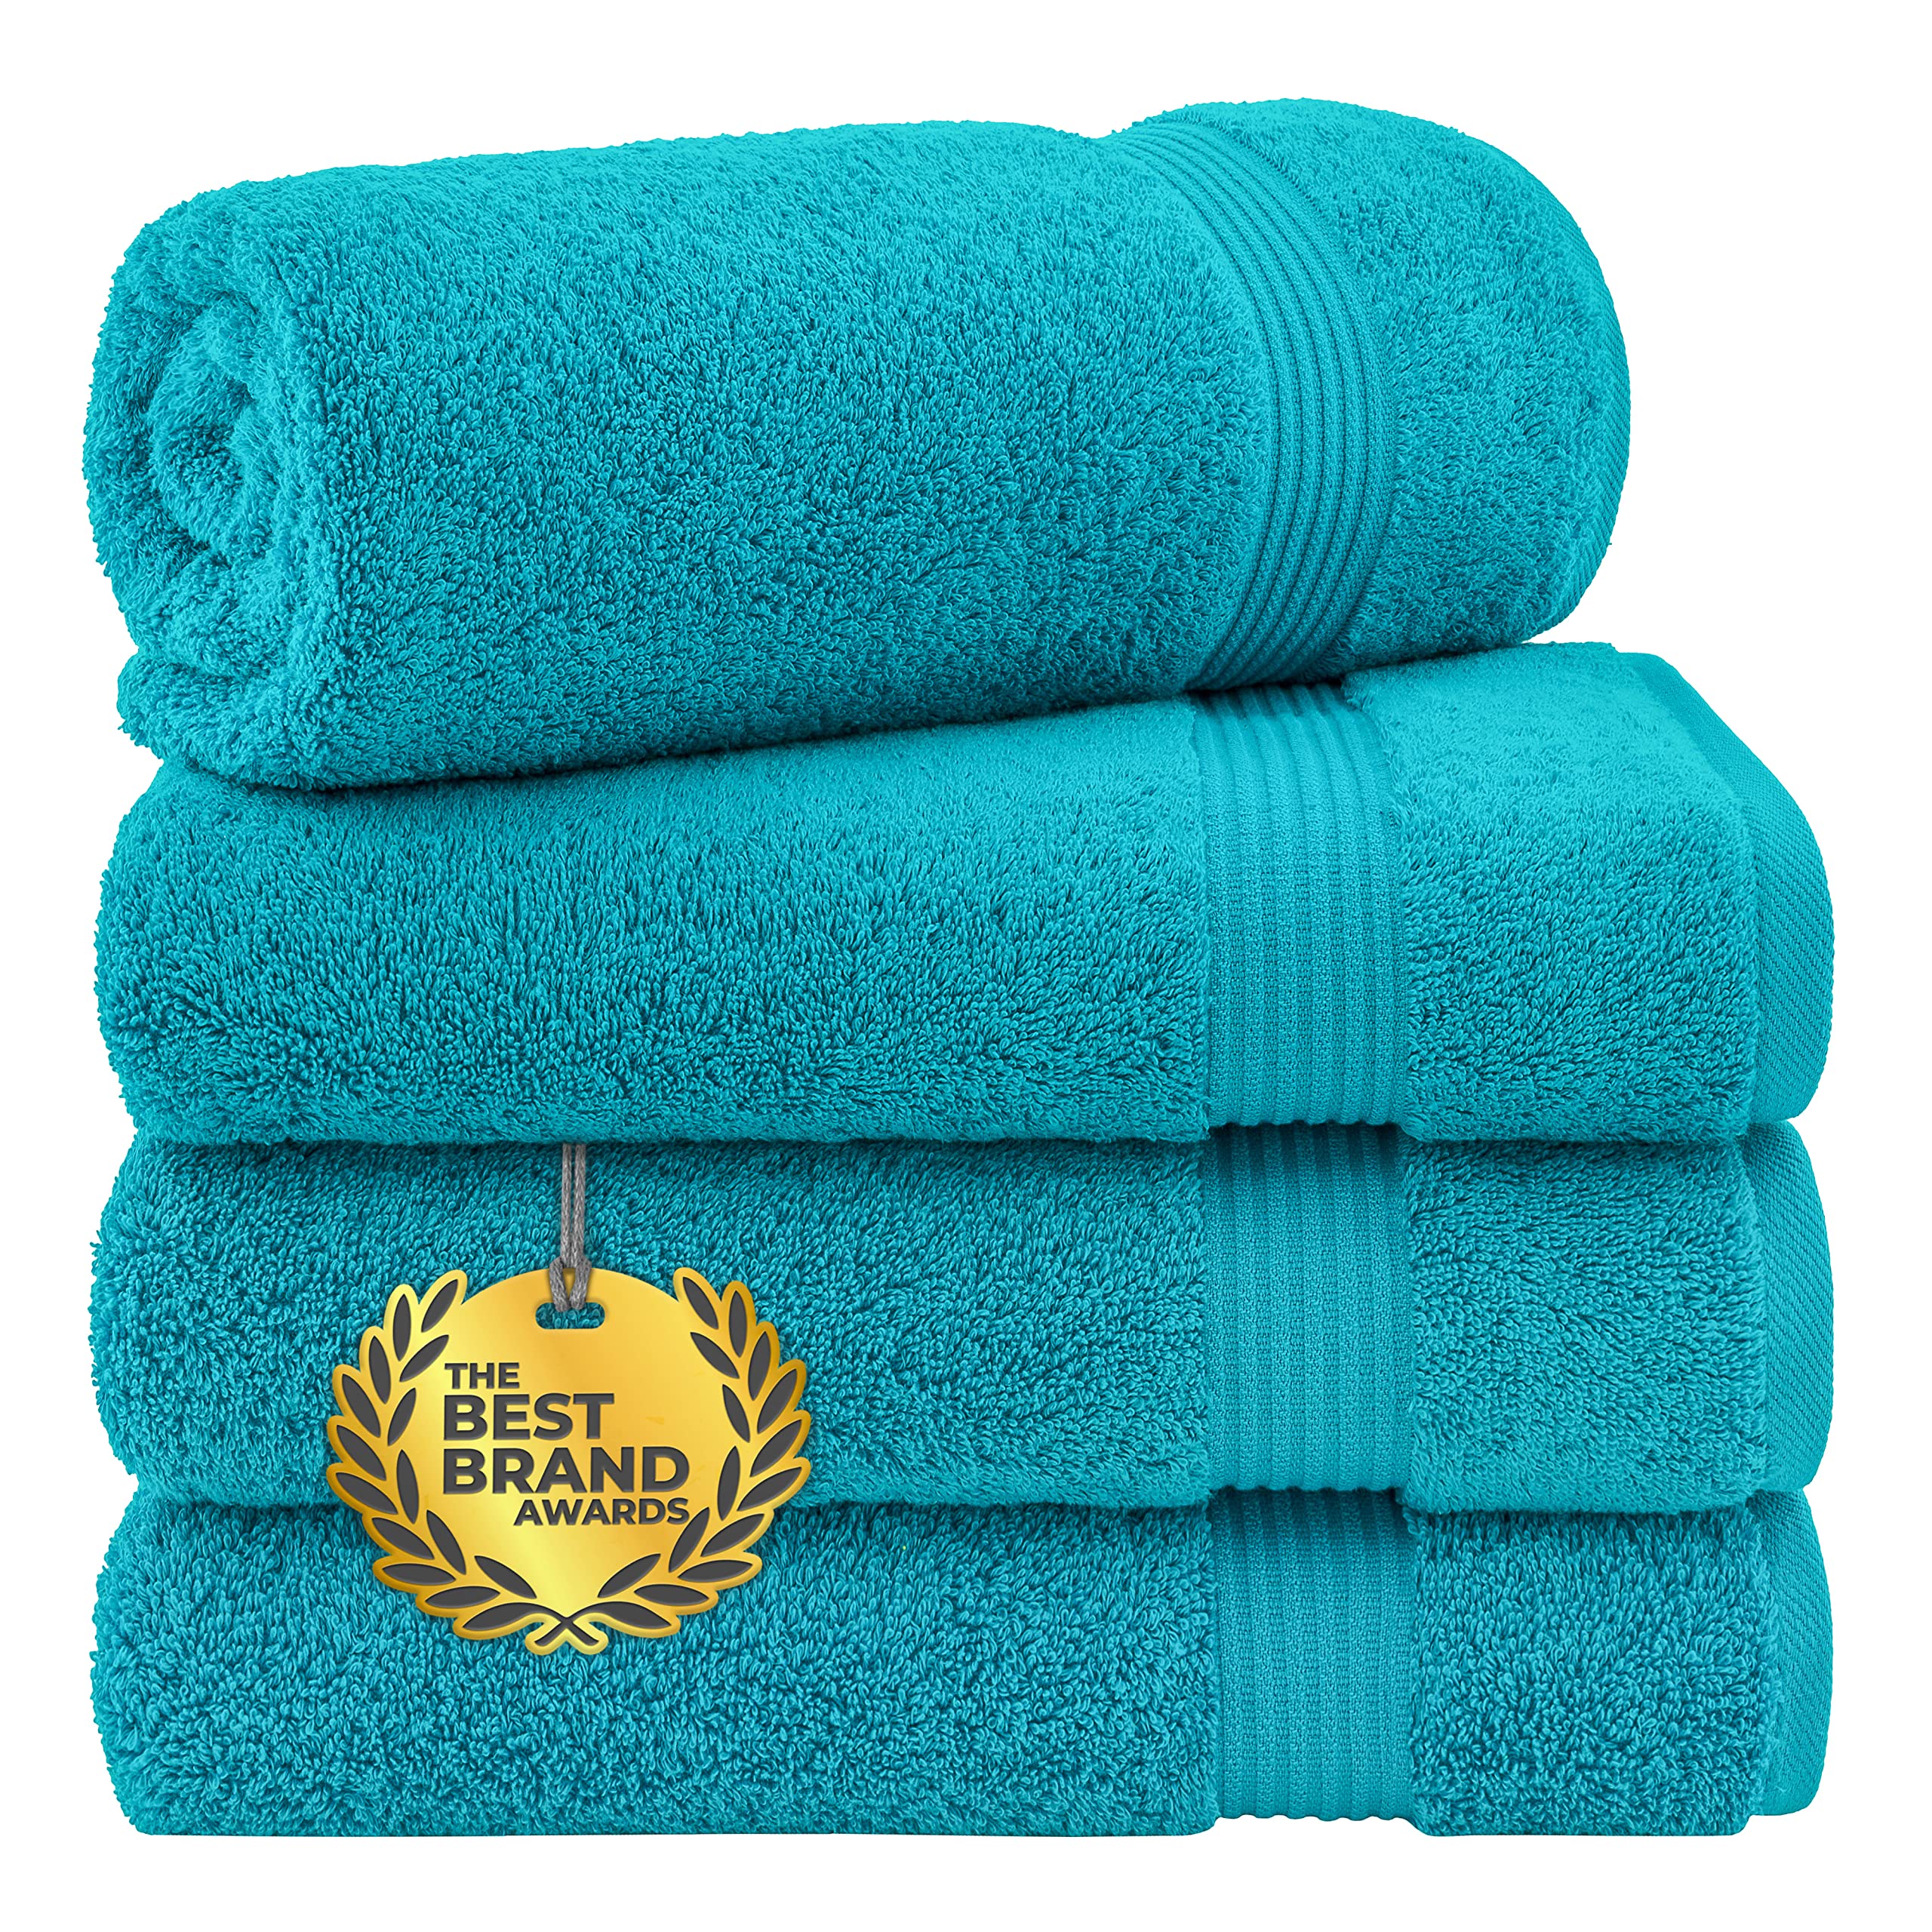 cotton Paradise Bath Towels, 100% Turkish cotton 27x54 inch 4 Piece Bath Towel Sets for Bathroom, Soft Absorbent Towels clearanc